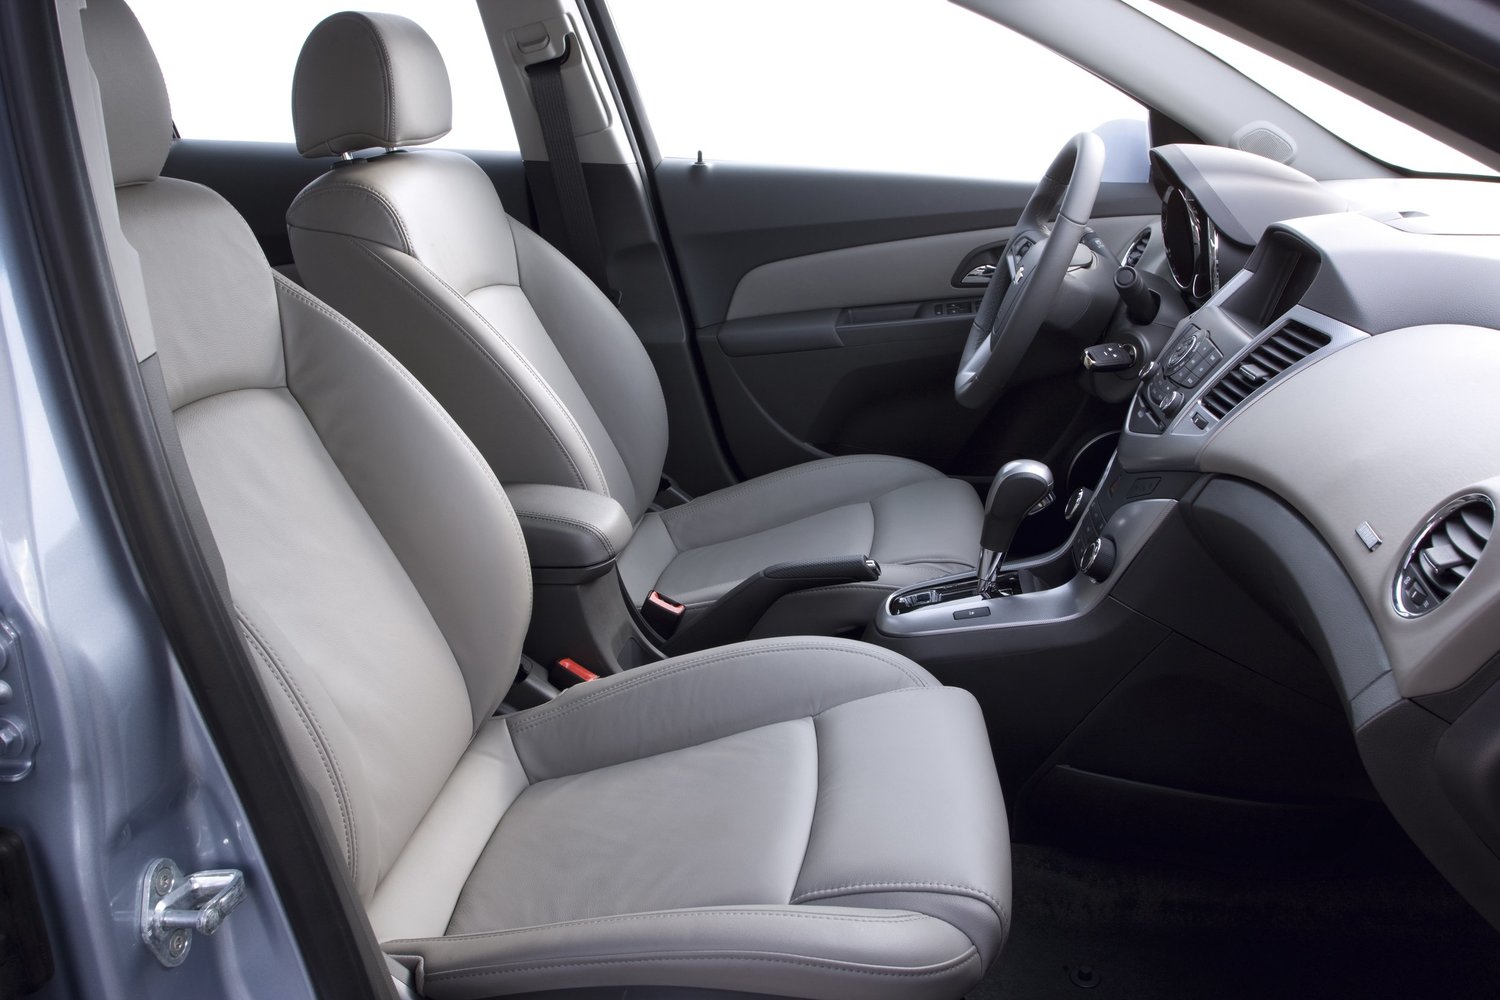 седан Chevrolet Cruze 2012 - 2015г выпуска модификация 1.4 MT (140 л.с.)